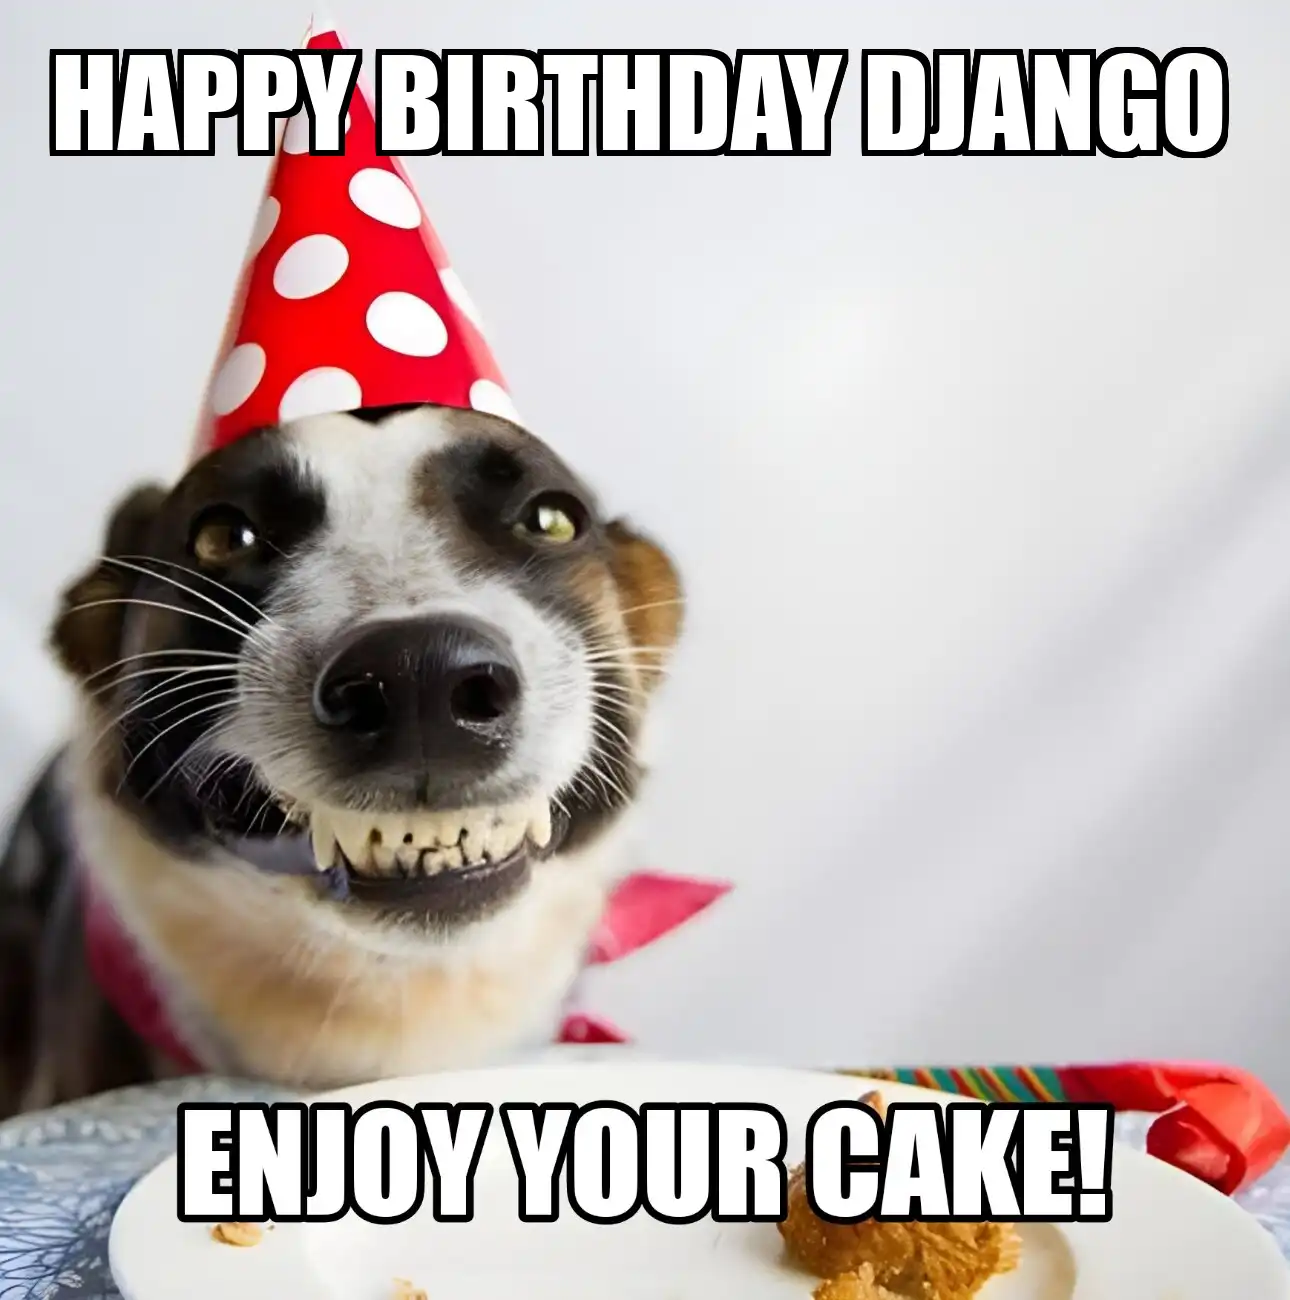 Happy Birthday Django Enjoy Your Cake Dog Meme